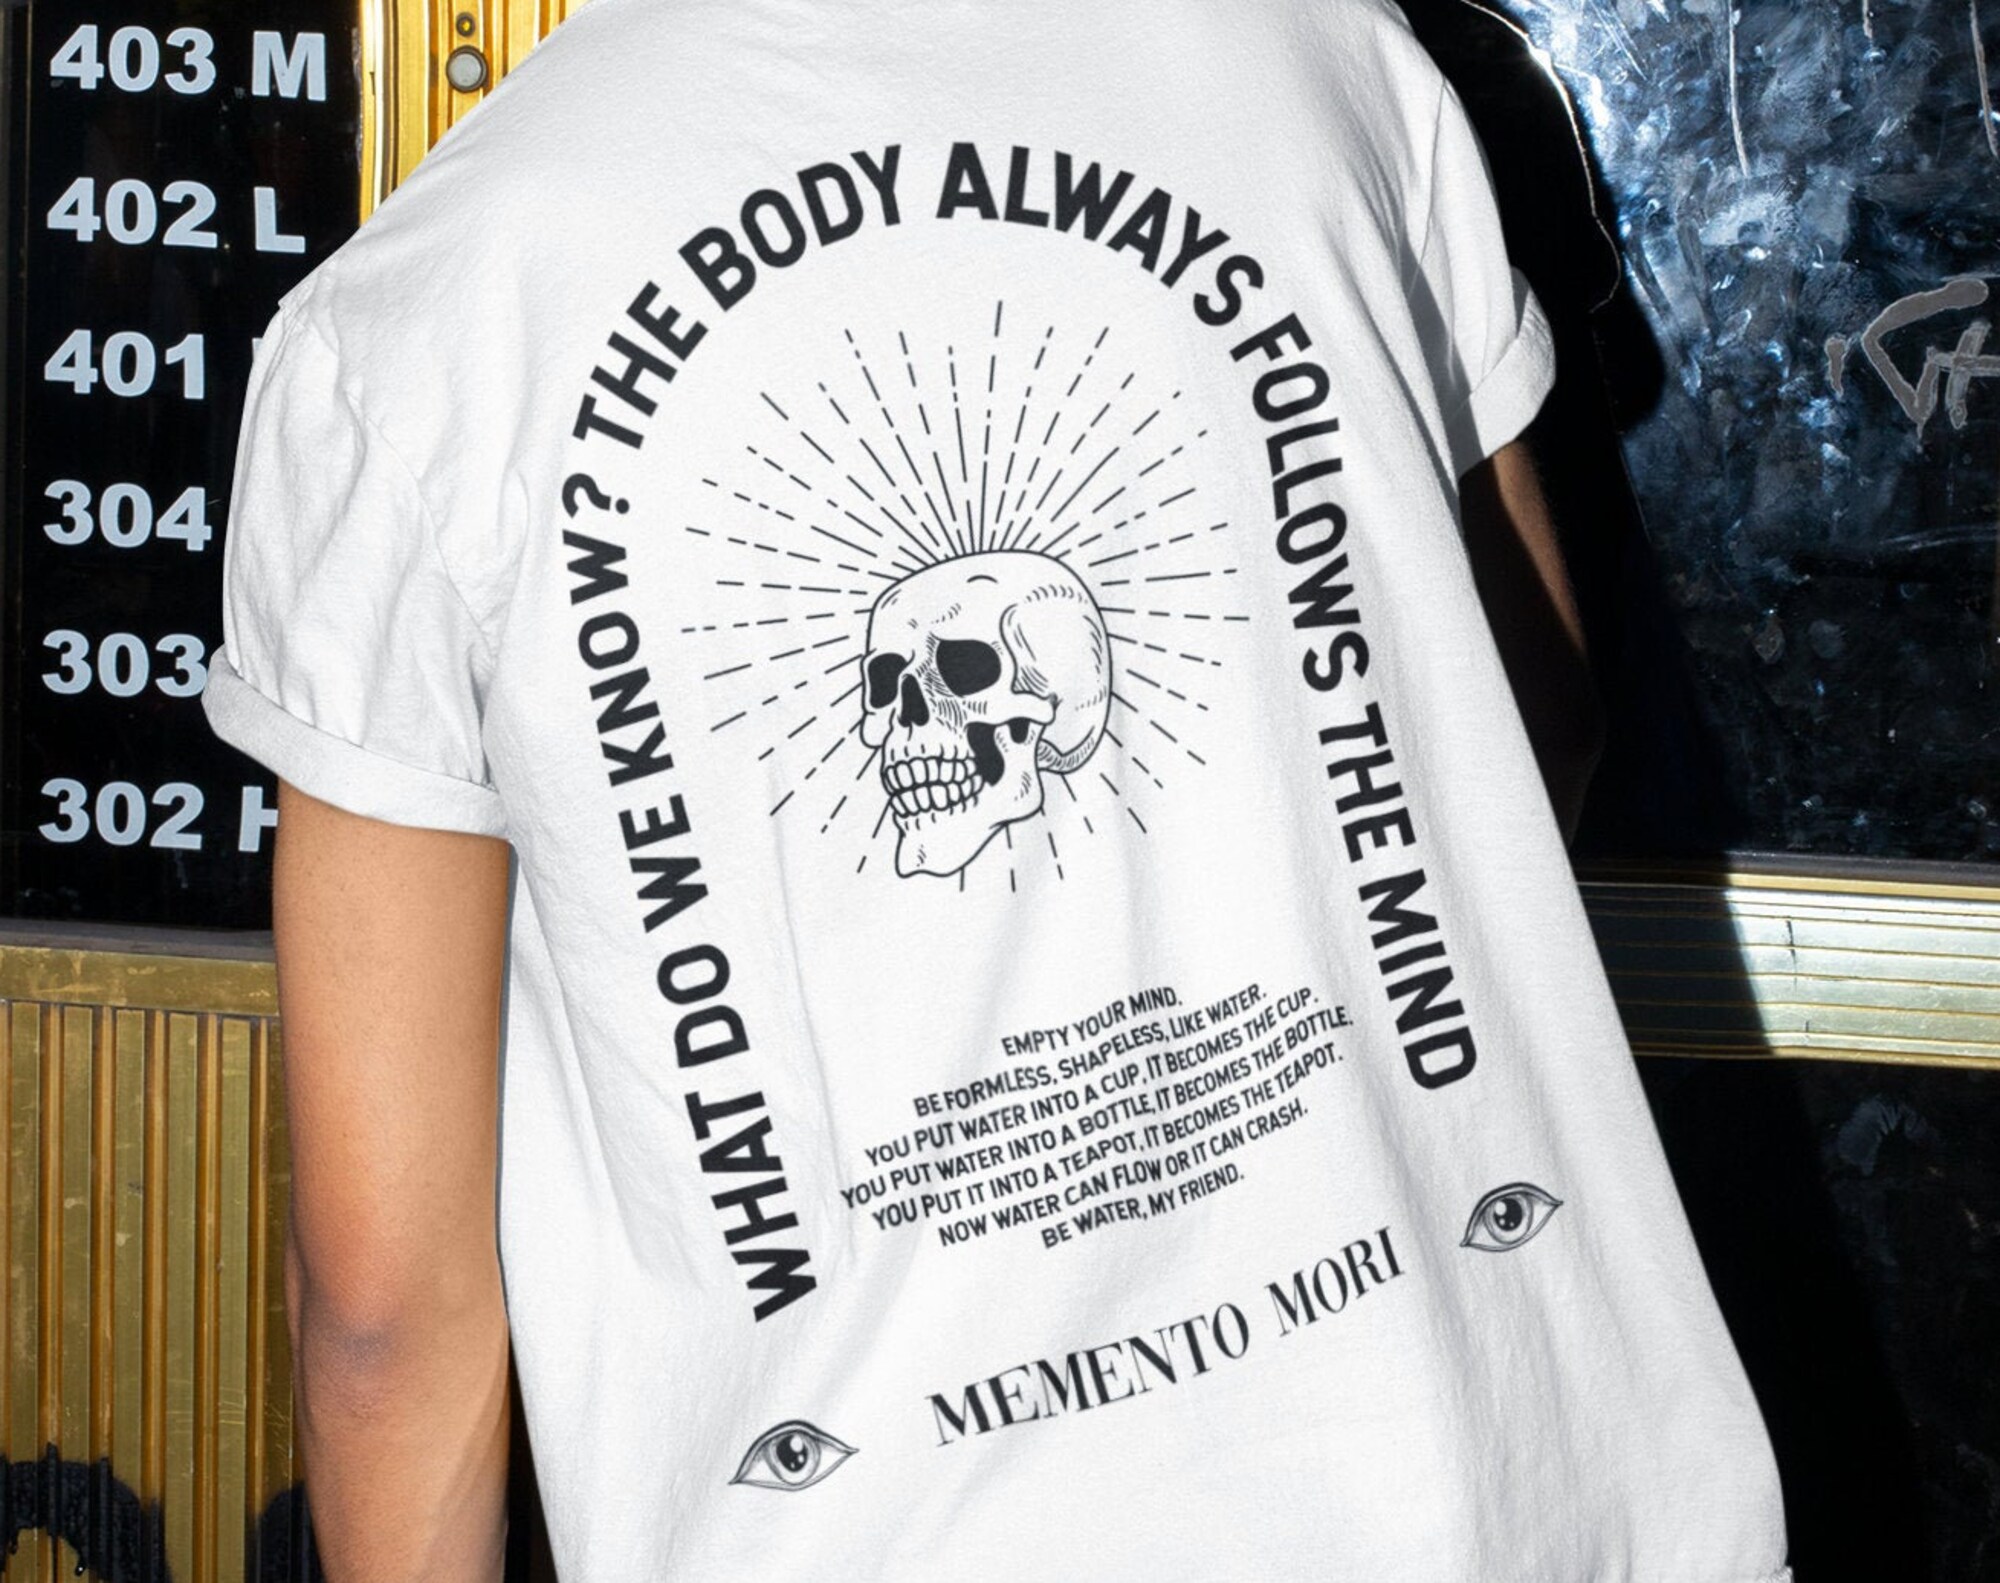 Discover Memento mori shirt, skull t shirt, Bruce lee quote